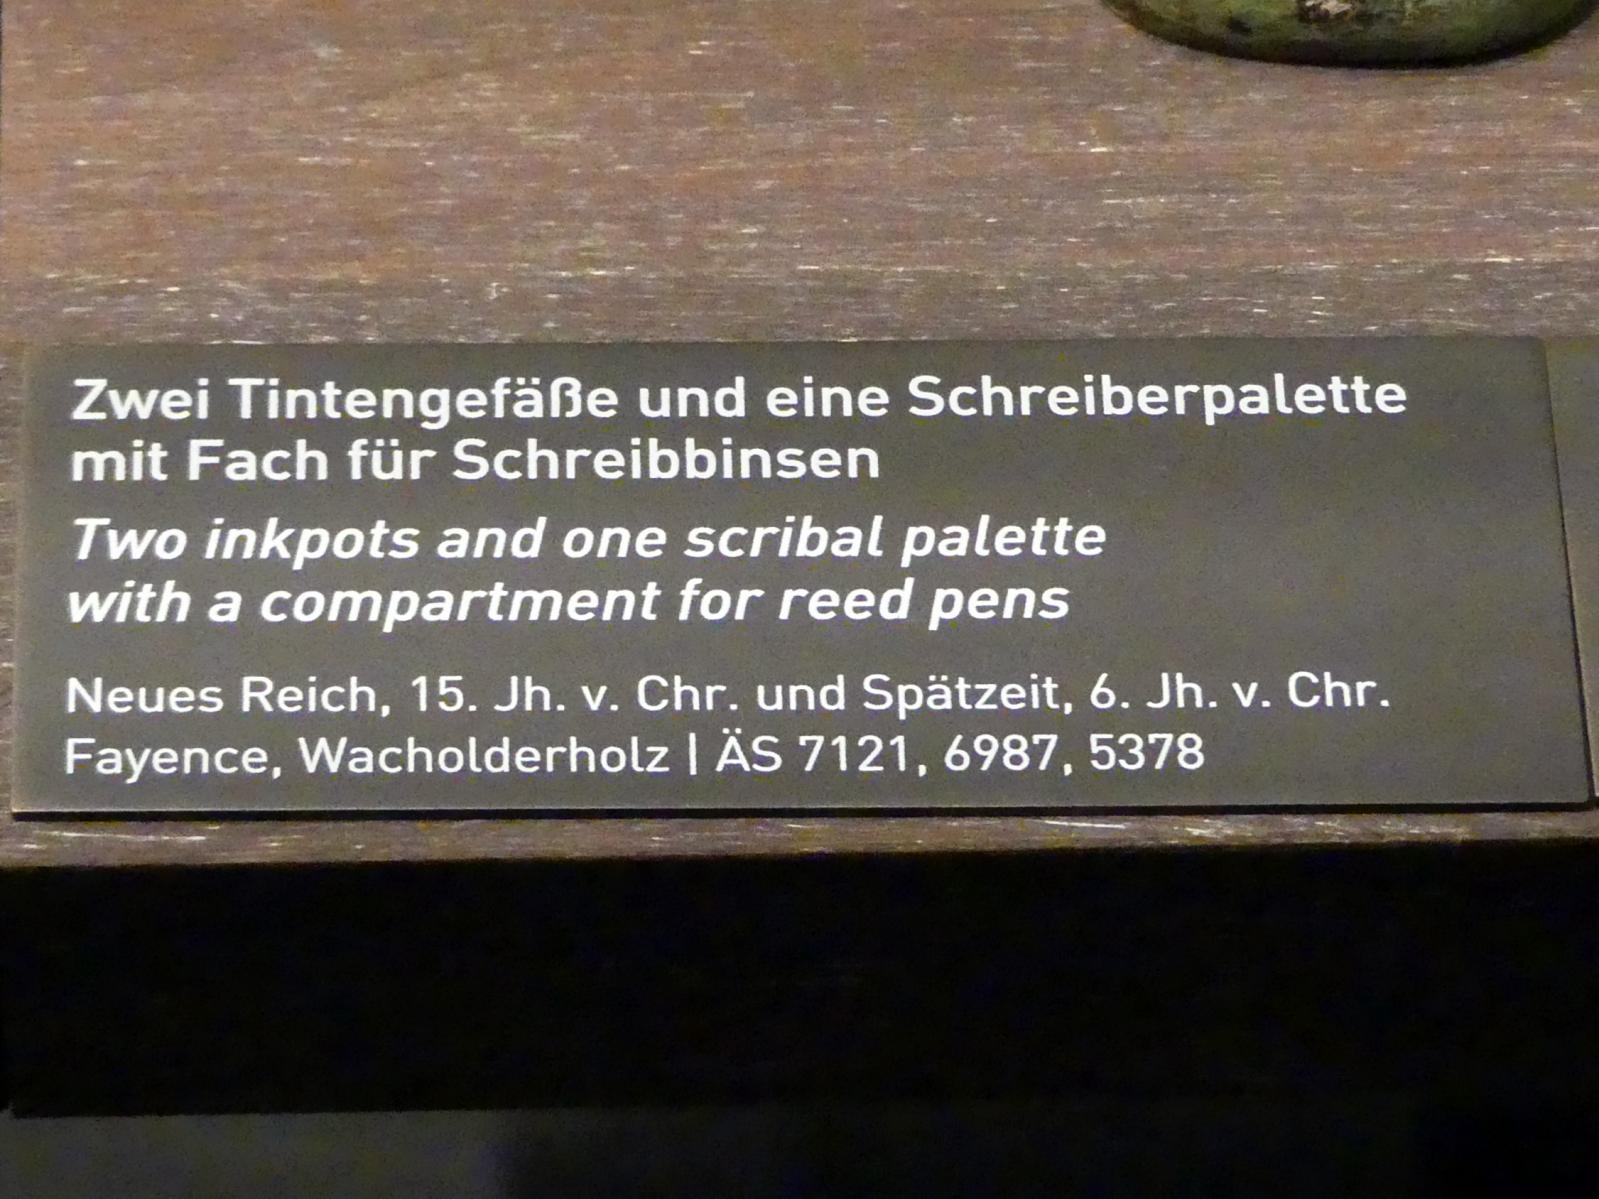 Tintengefäß, Neues Reich, 953 - 887 v. Chr., 1500 - 1400 v. Chr., Bild 2/2